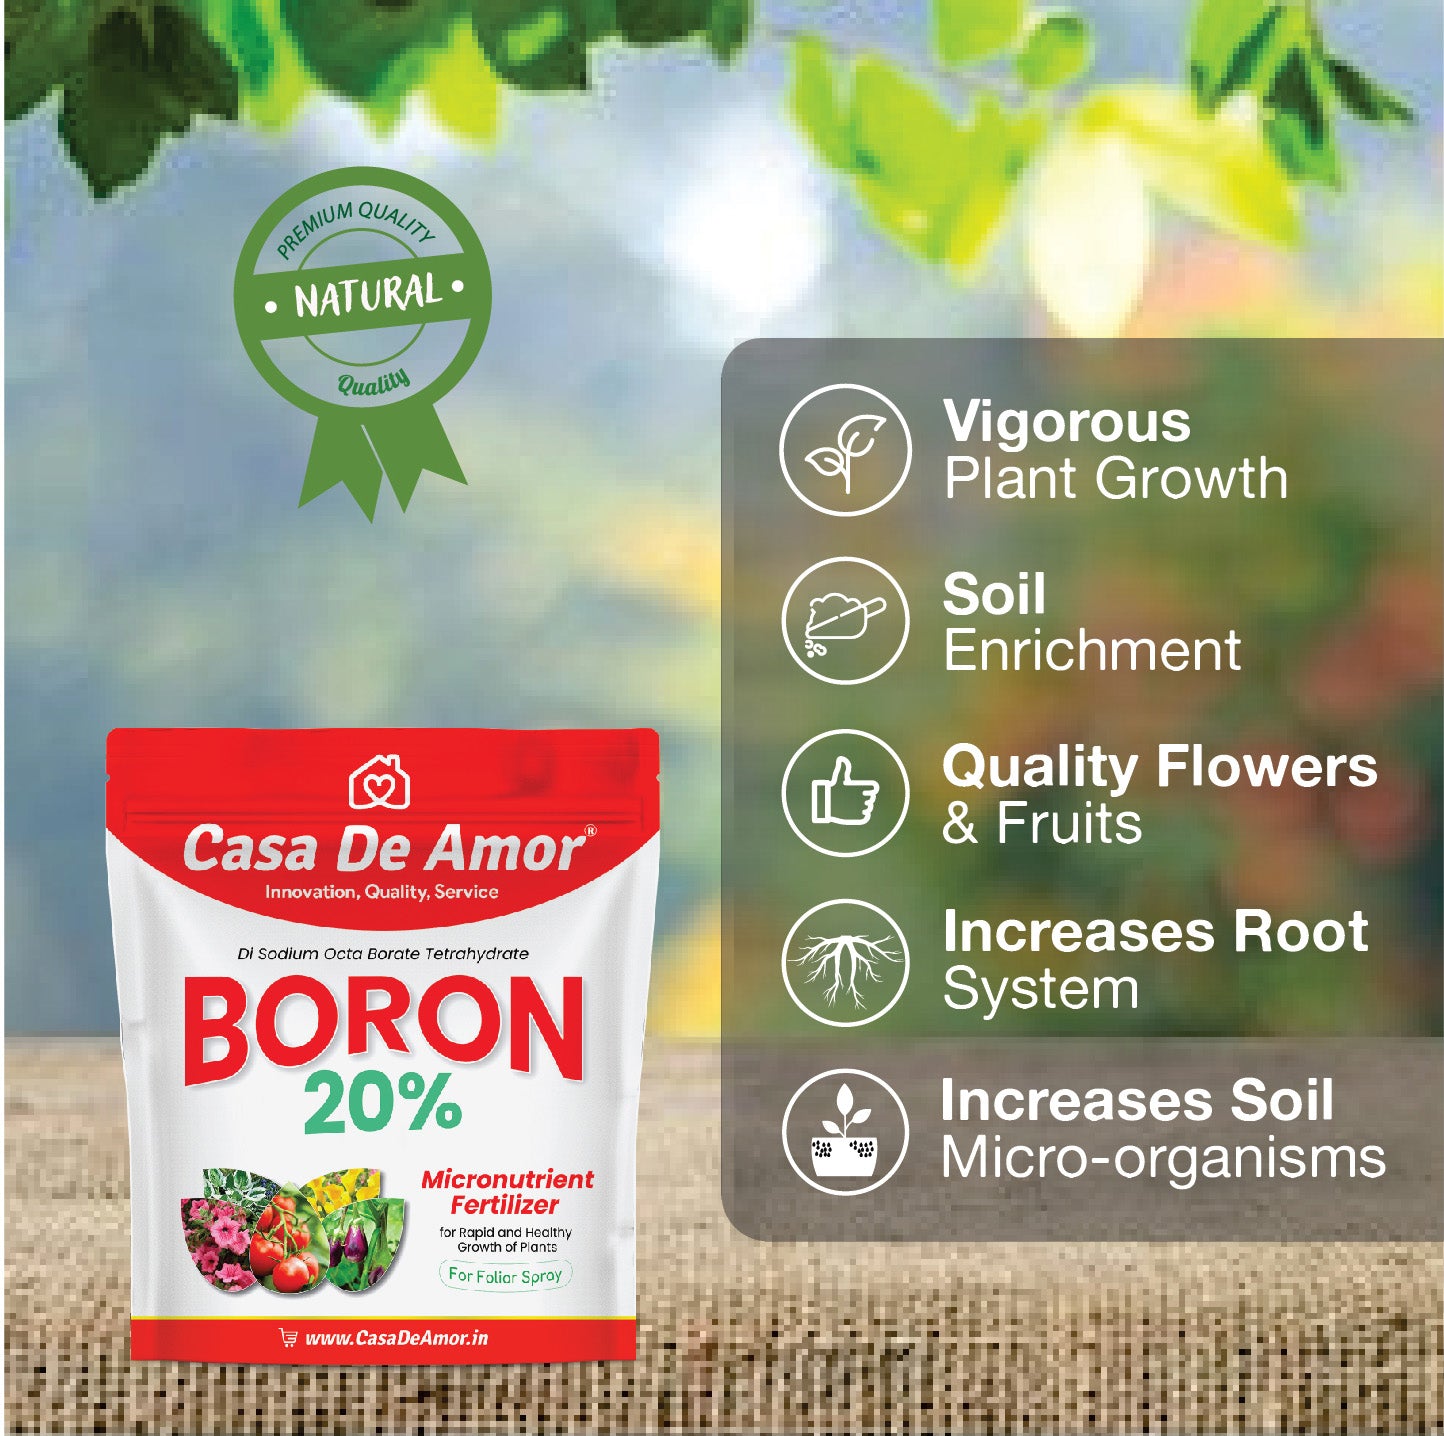 Casa De Amor Boron 20% Micronutrient Fertilizer for Healthy Growth of Vegetable Plants and Gardening